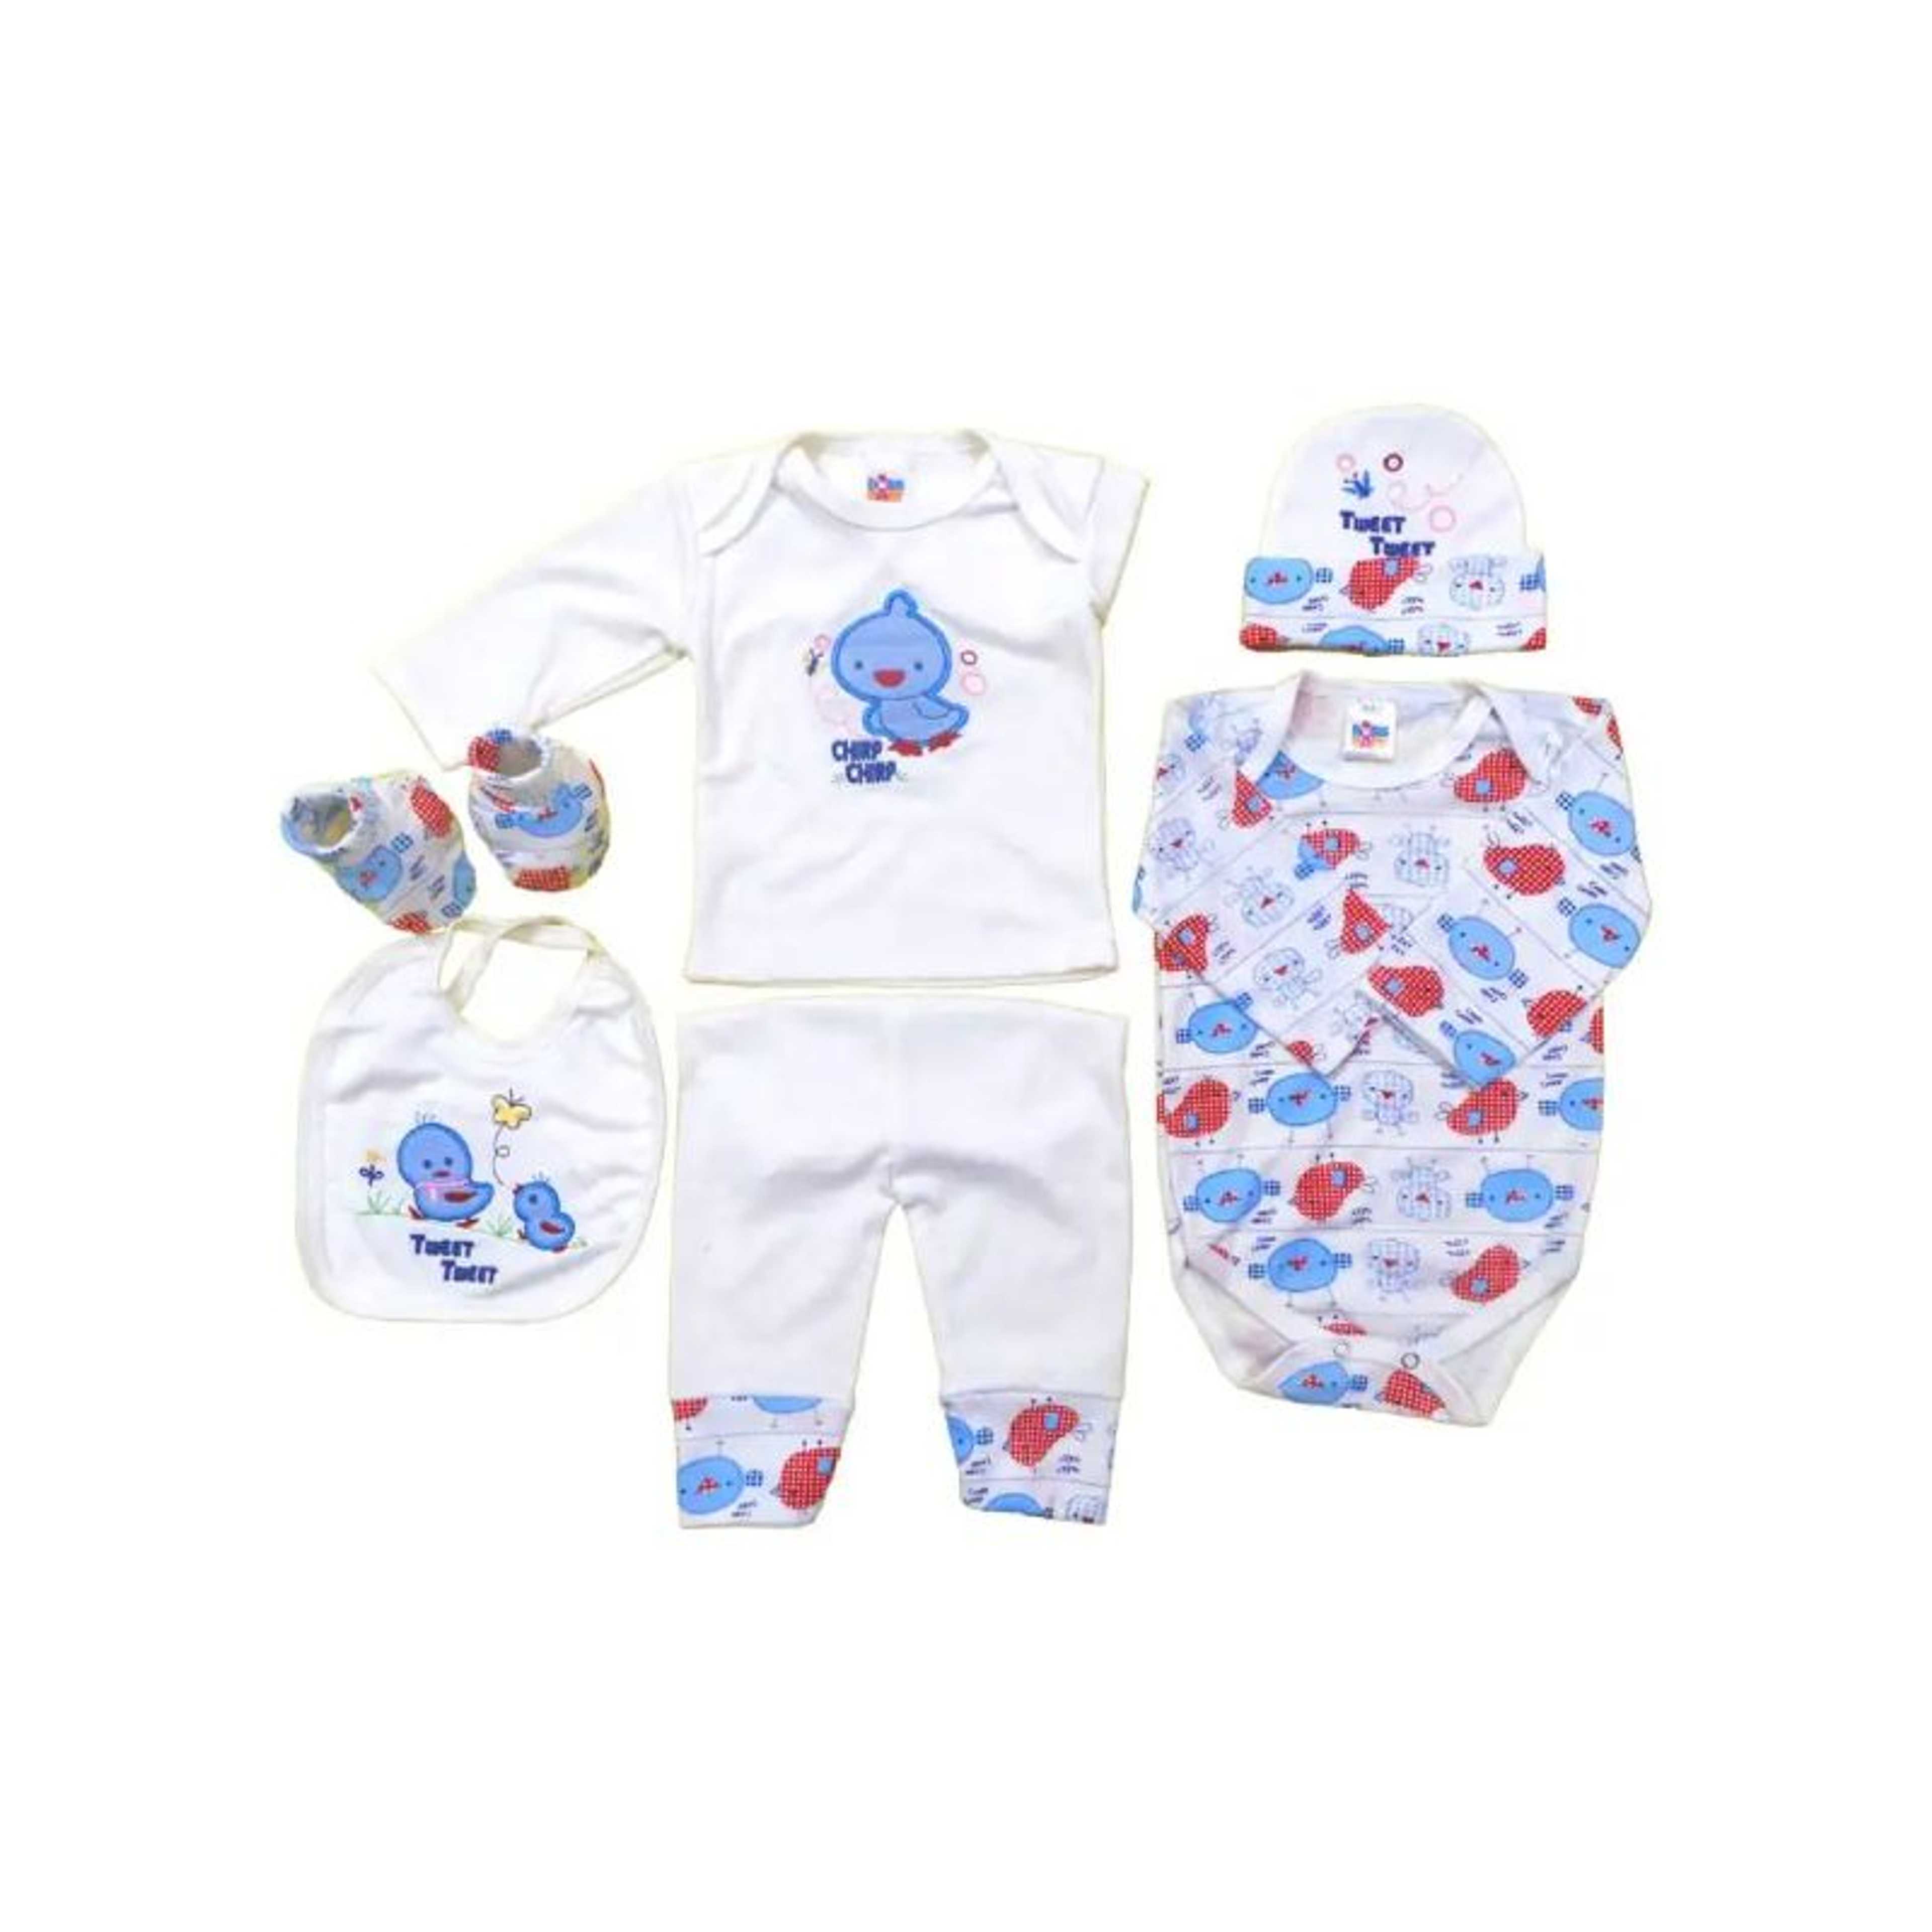 Chirp Tweet Baby Blue Clothing set (New Born)